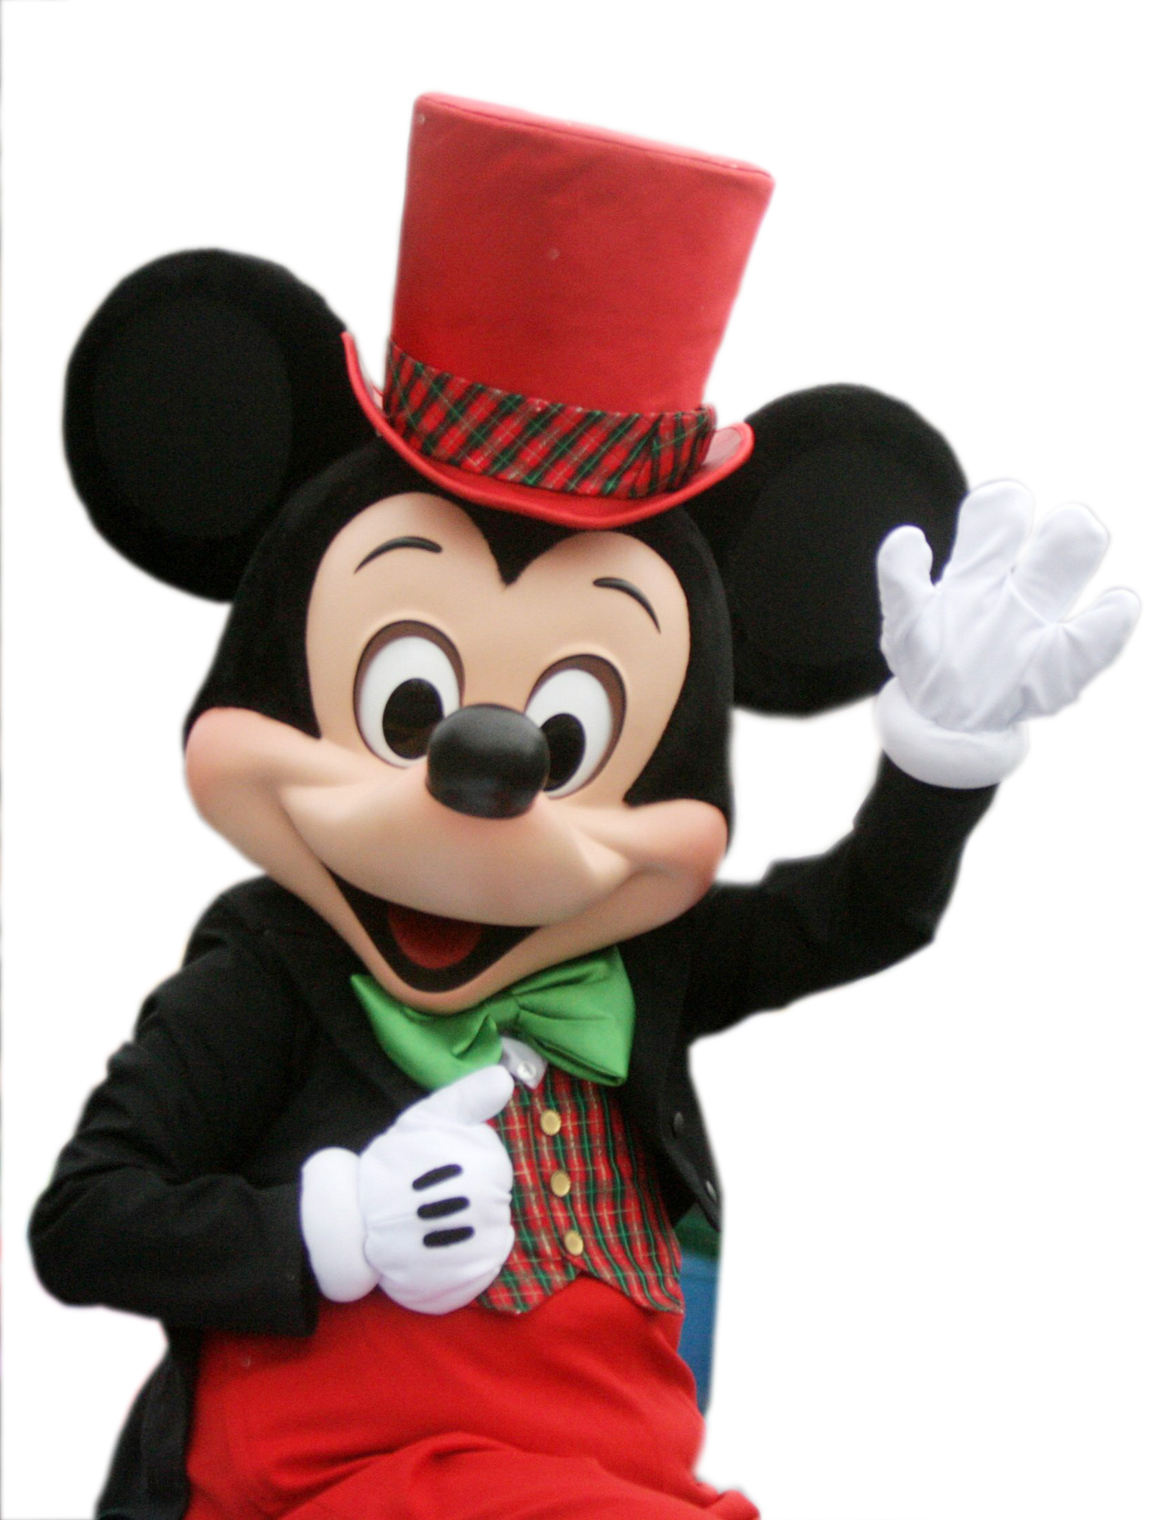 Mickey may enter public domain | The Spokesman-Review